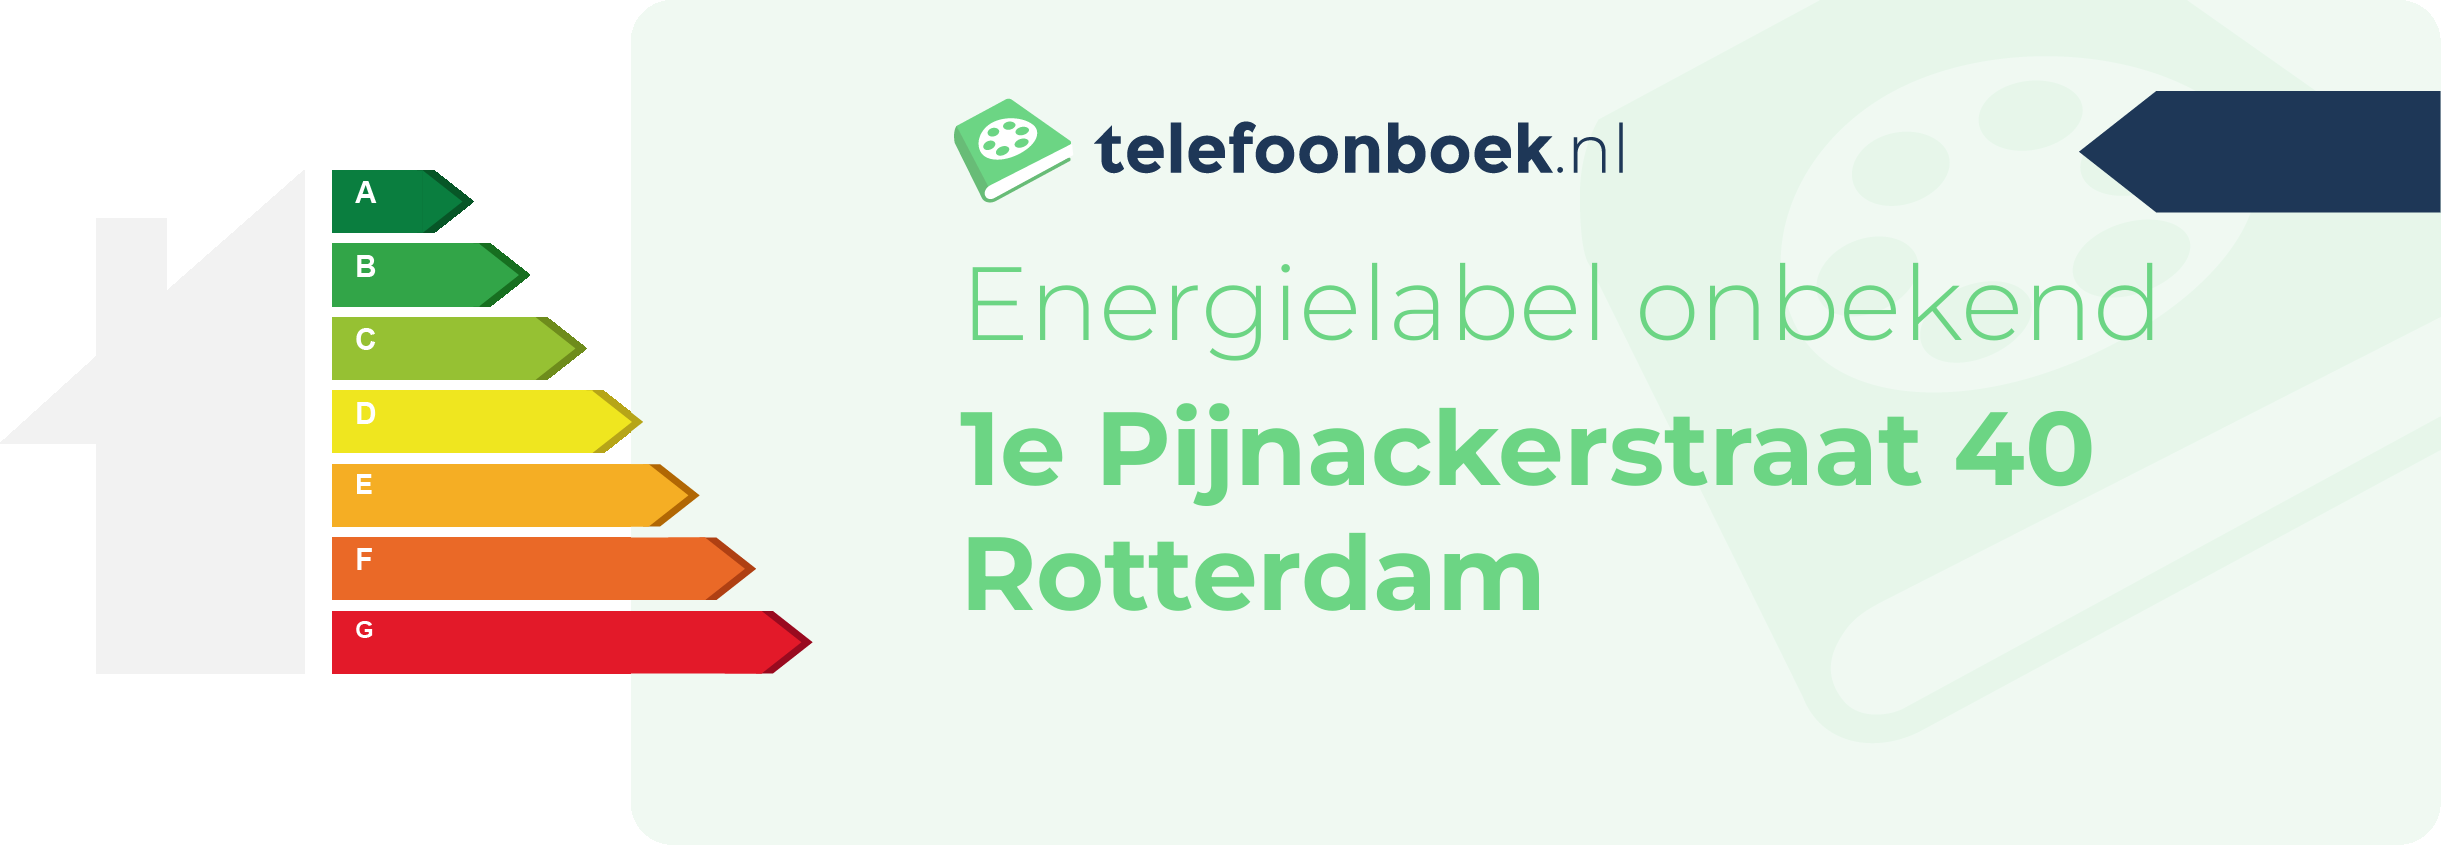 Energielabel 1e Pijnackerstraat 40 Rotterdam